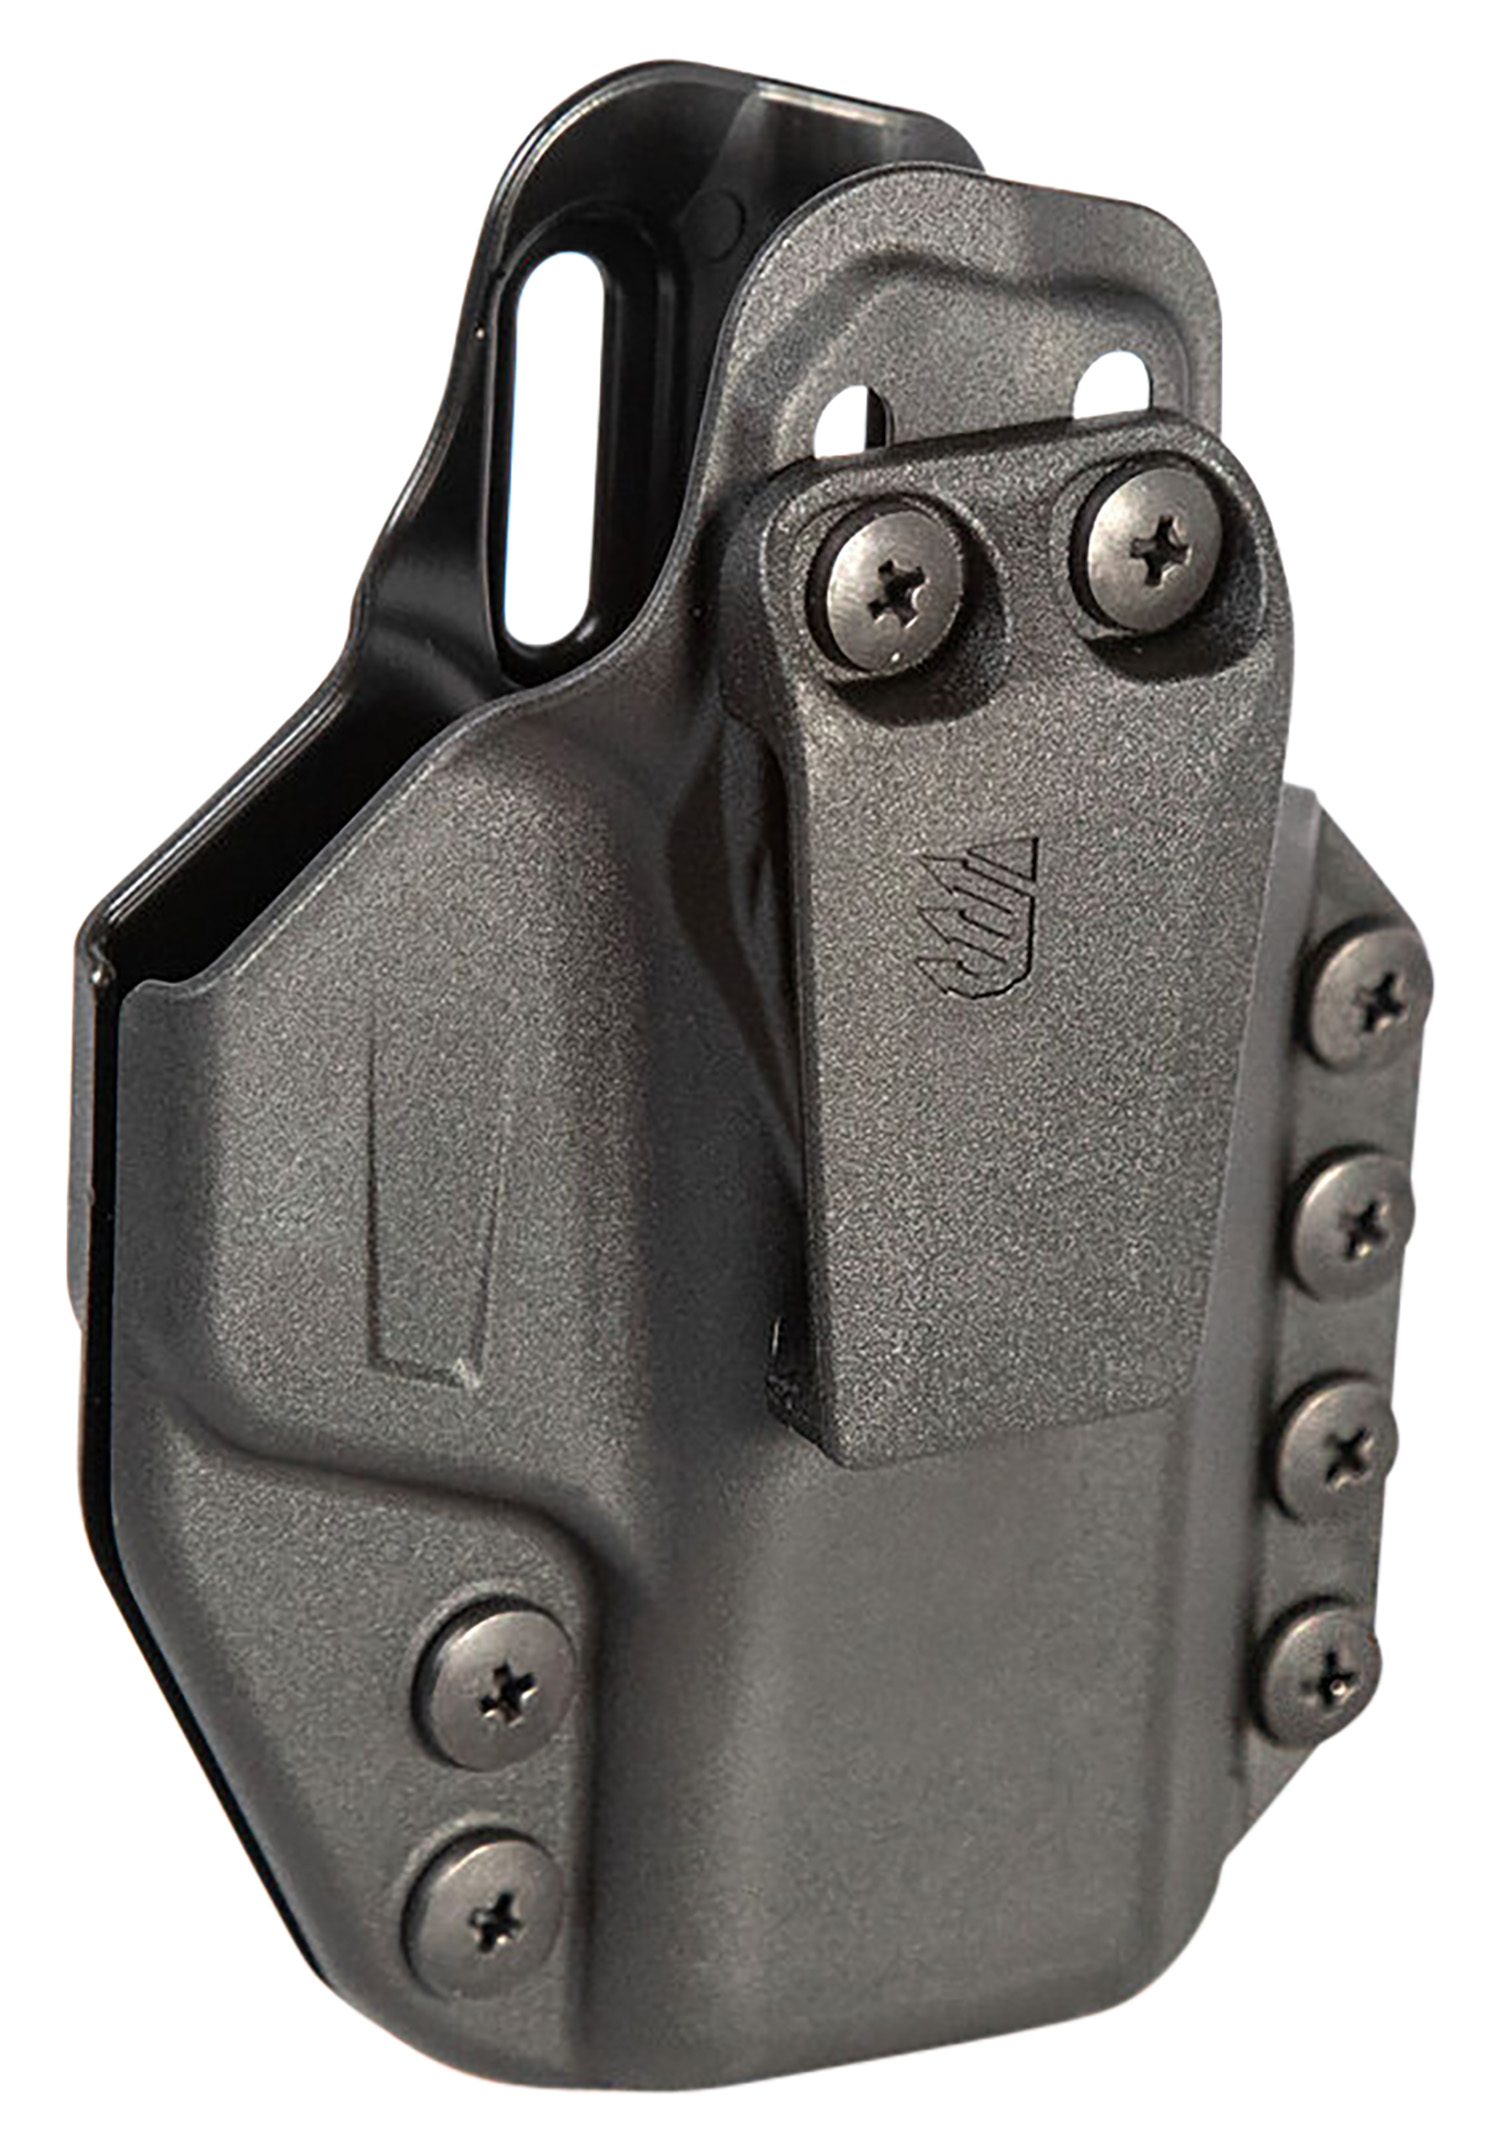 Blackhawk Stache Base Holster Kit IWB Black Polymer Belt Clip Fits Glock 26 Ambidextrous